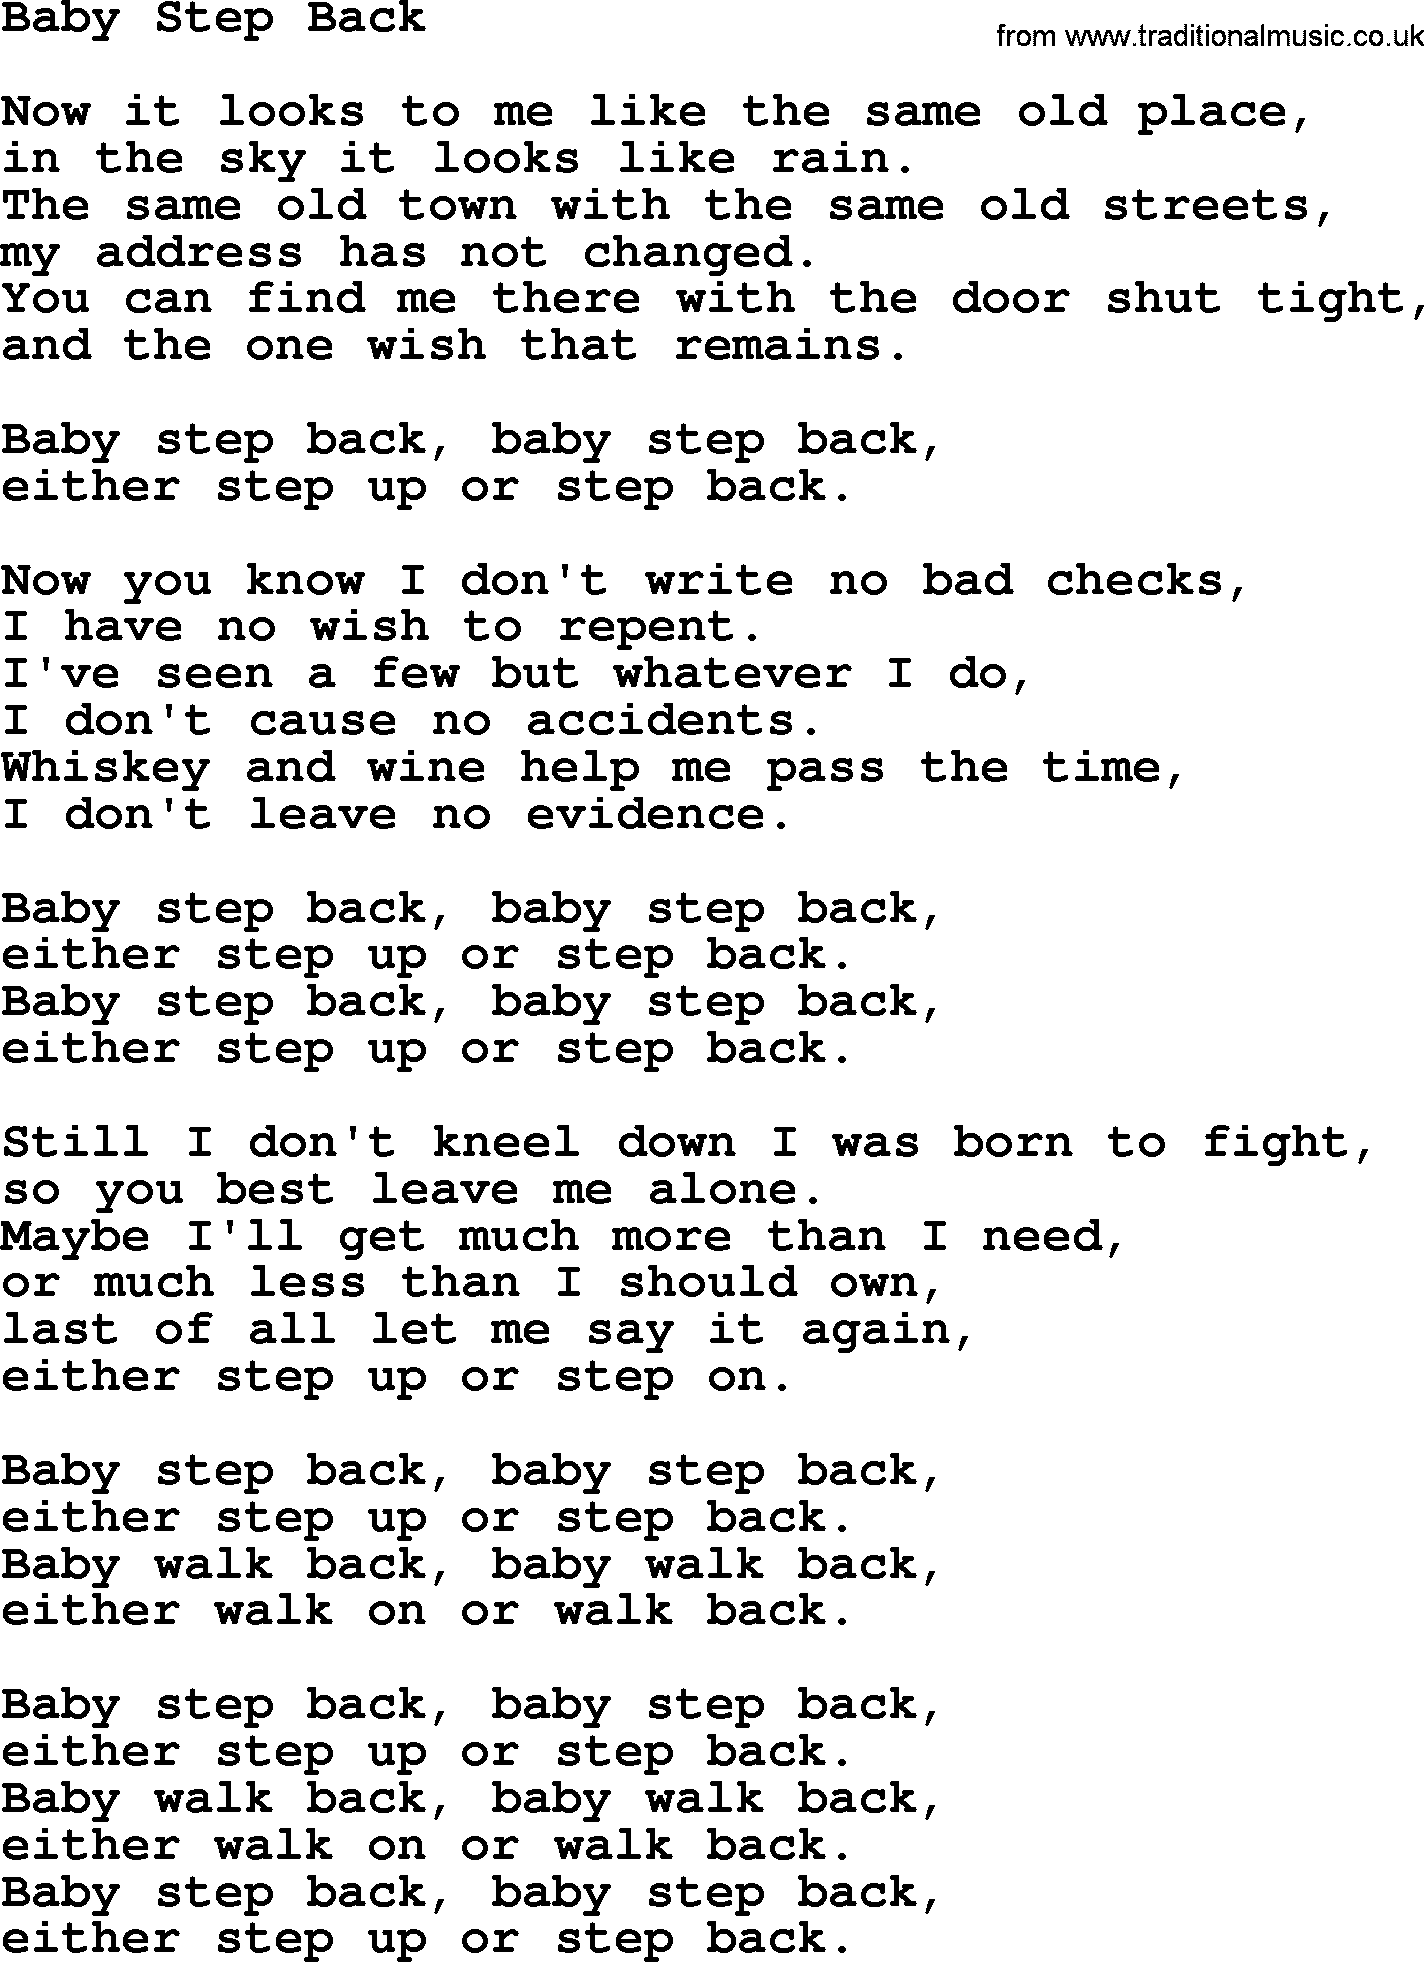 Gordon Lightfoot song Baby Step Back, lyrics